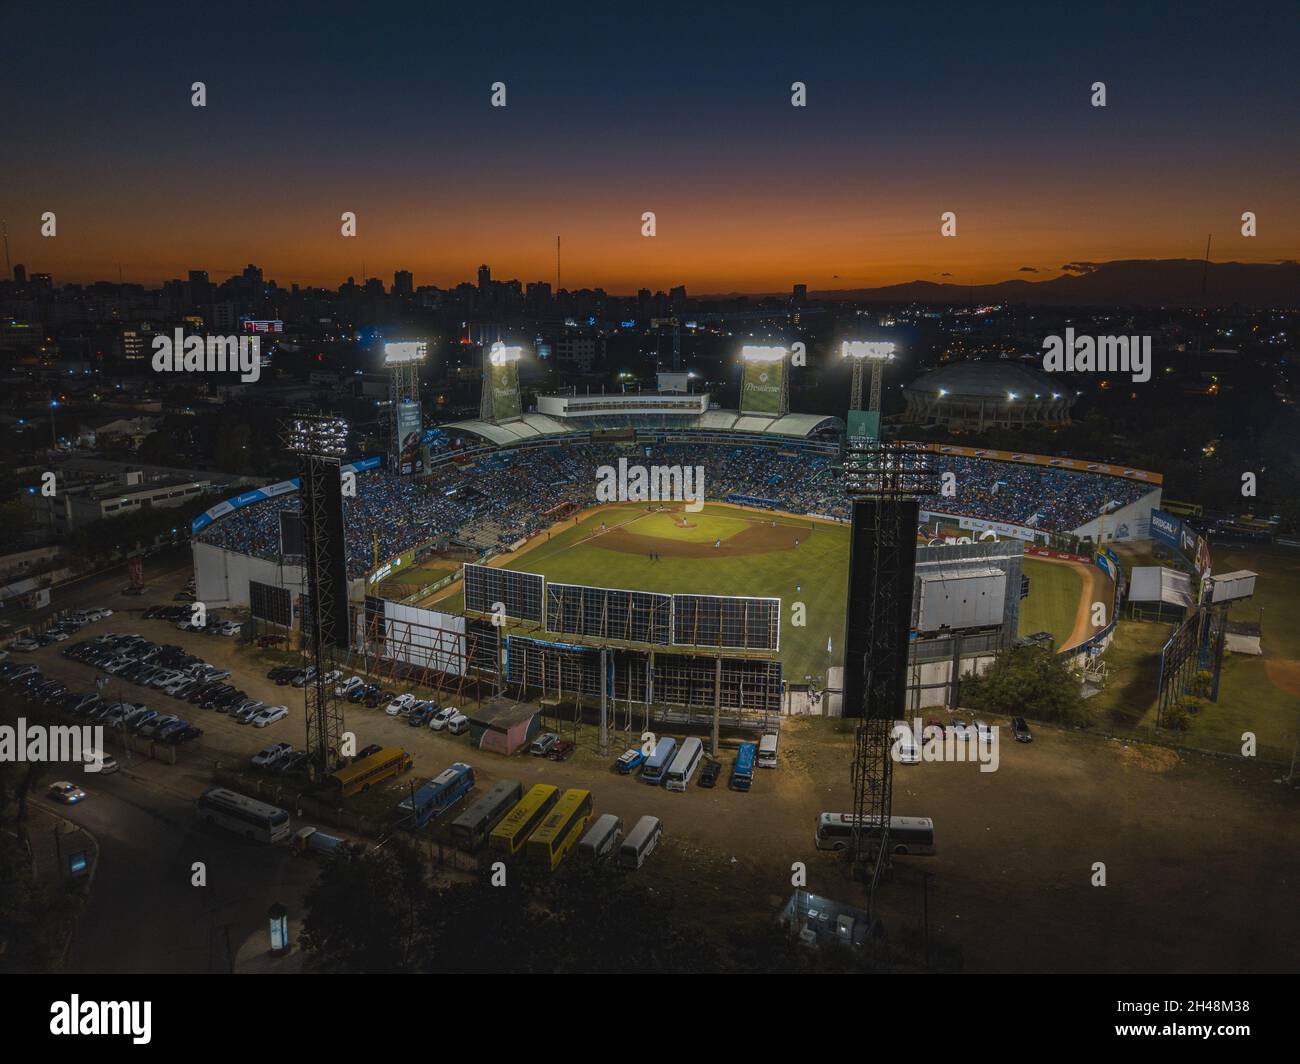 SANTO DOMINGO, DOMINICAN REPUBLIC - Dec 02, 2018: A landscape of the Quisqueya Baseball Stadium during the sunset in Santo Domingo, Dominican Republic Stock Photo